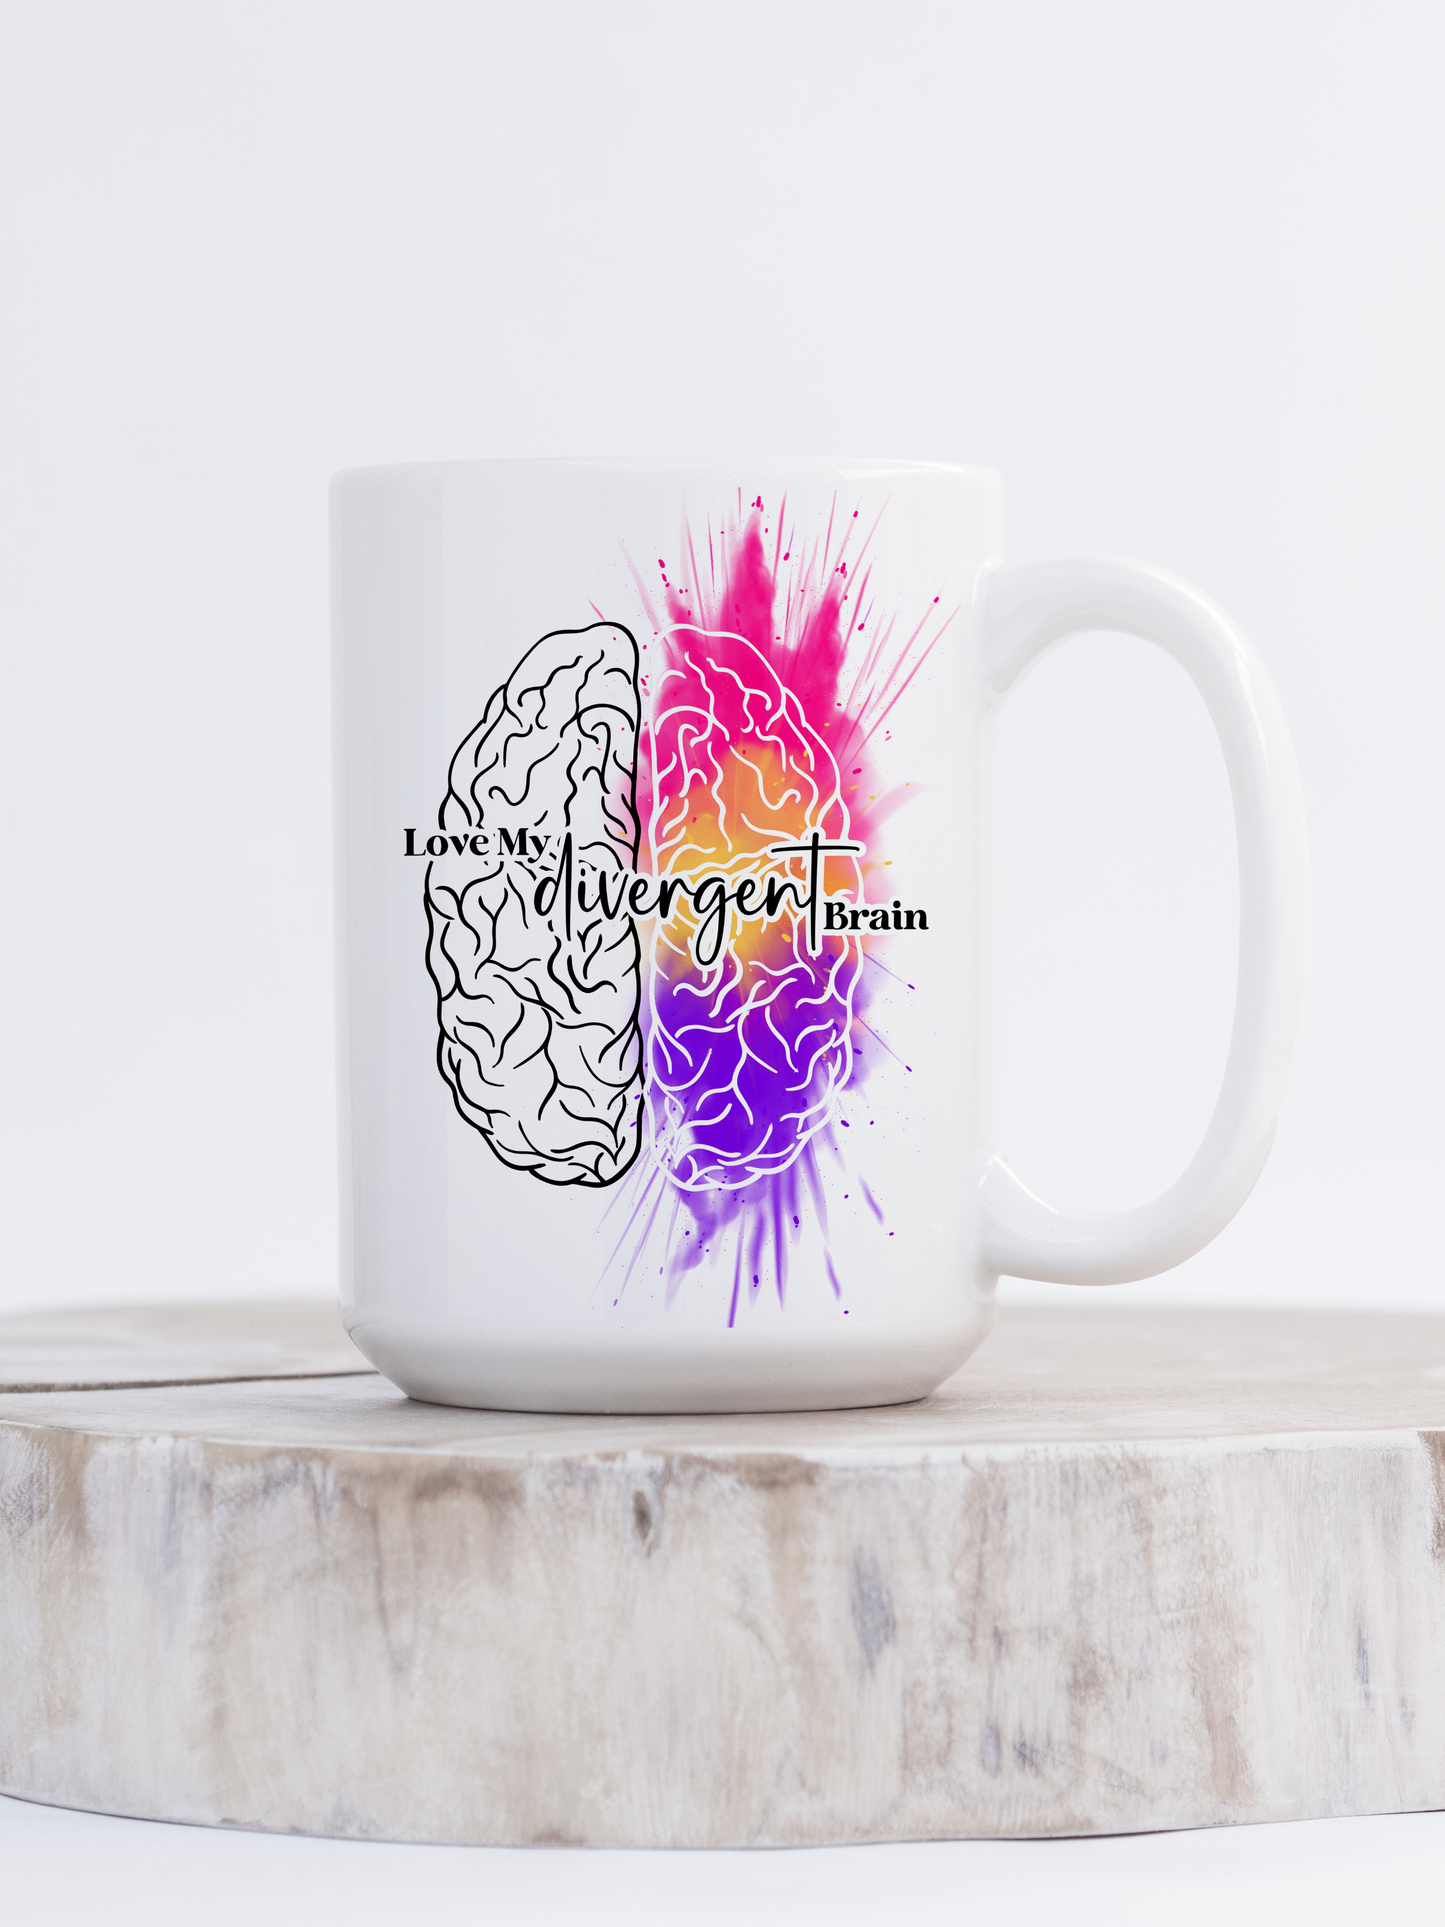 Love My Divergent Brain Ceramic Mug